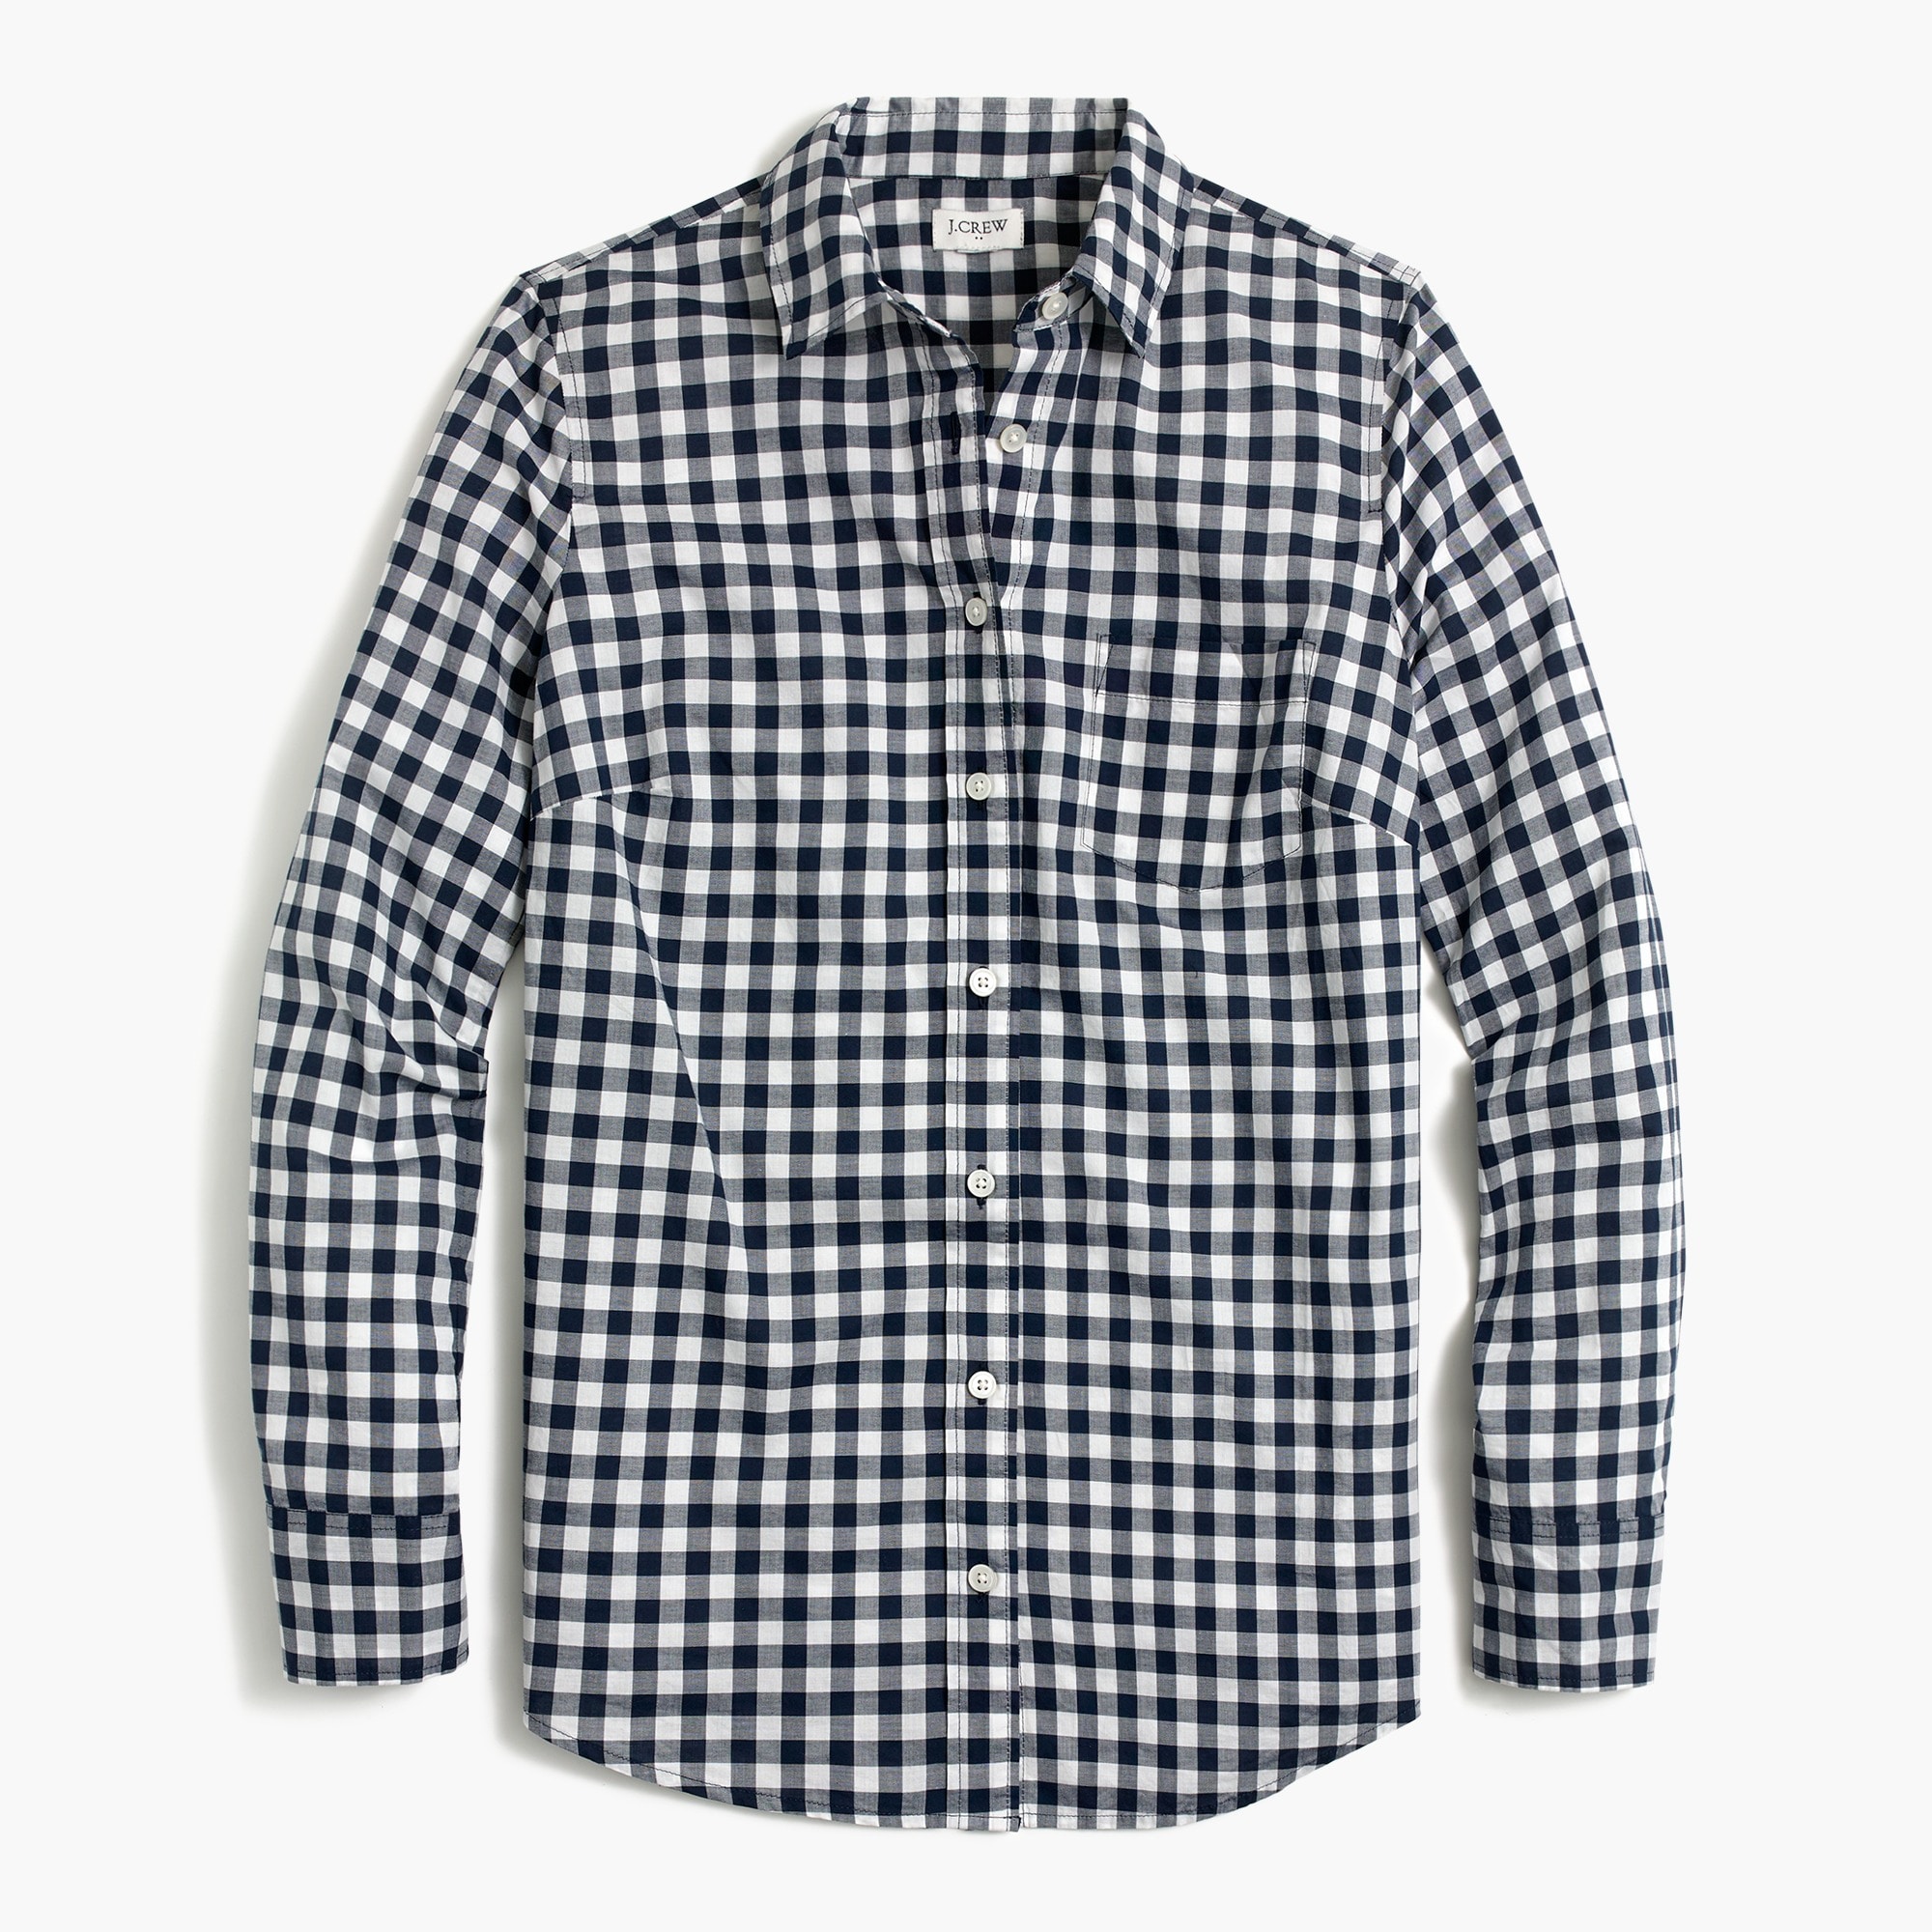 Gingham lightweight cotton shirt signature fit